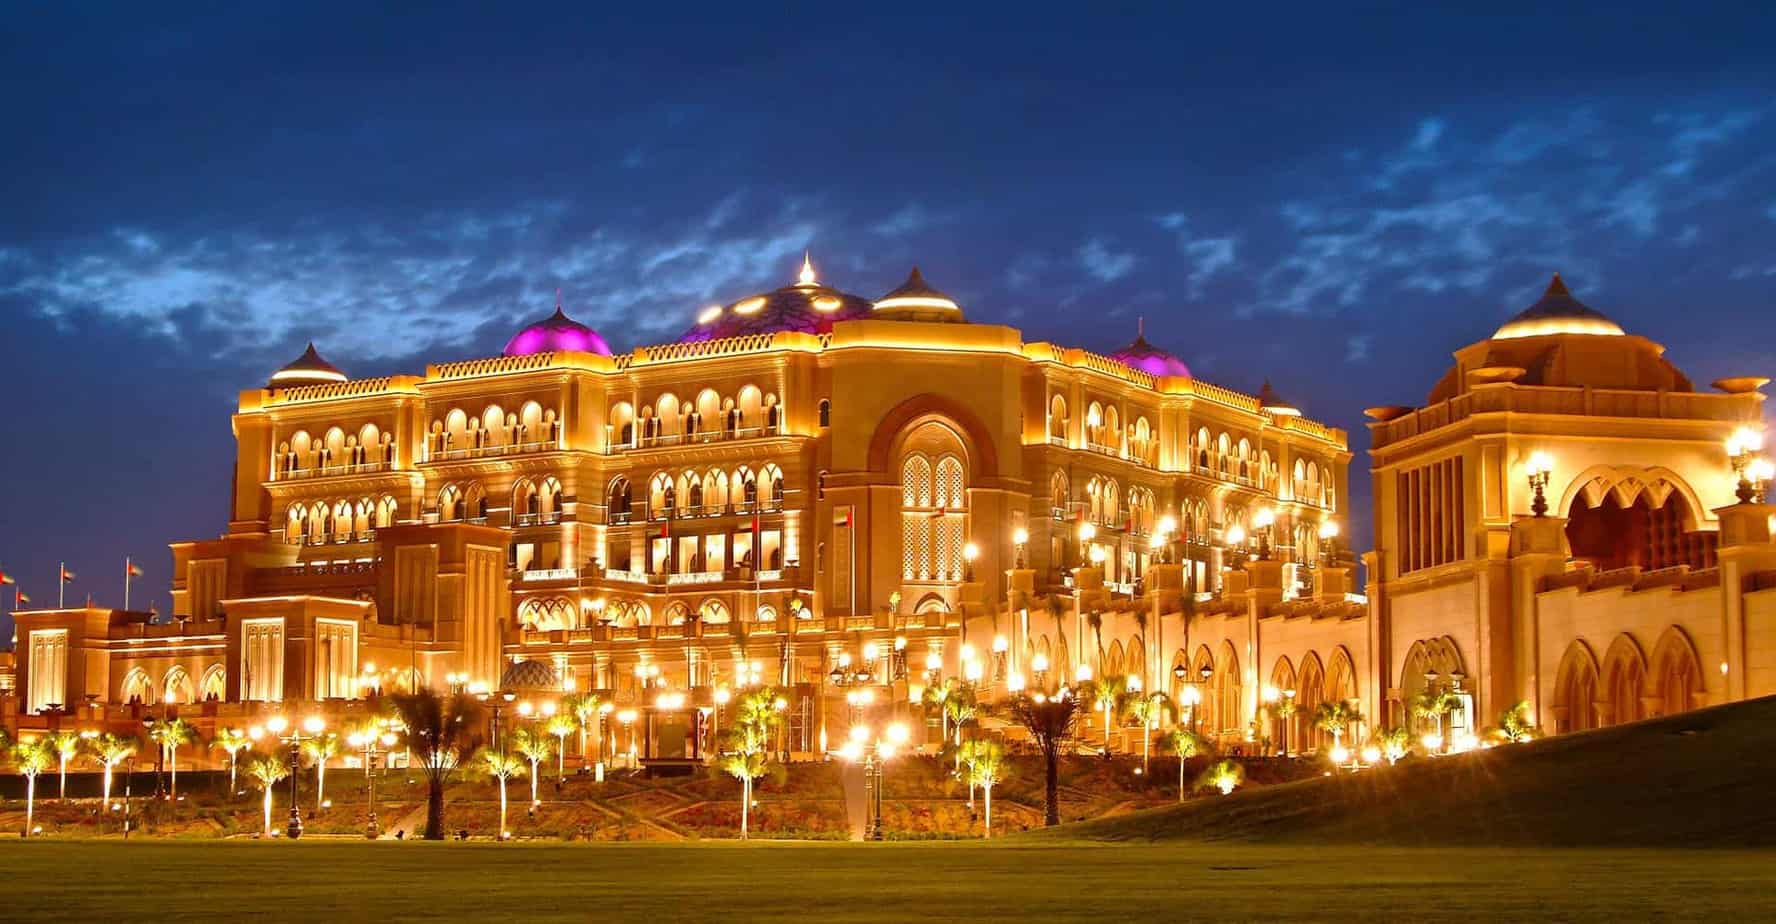 The Celestial Emirates Palace In Abu Dhabi - Travel Plan Dubai